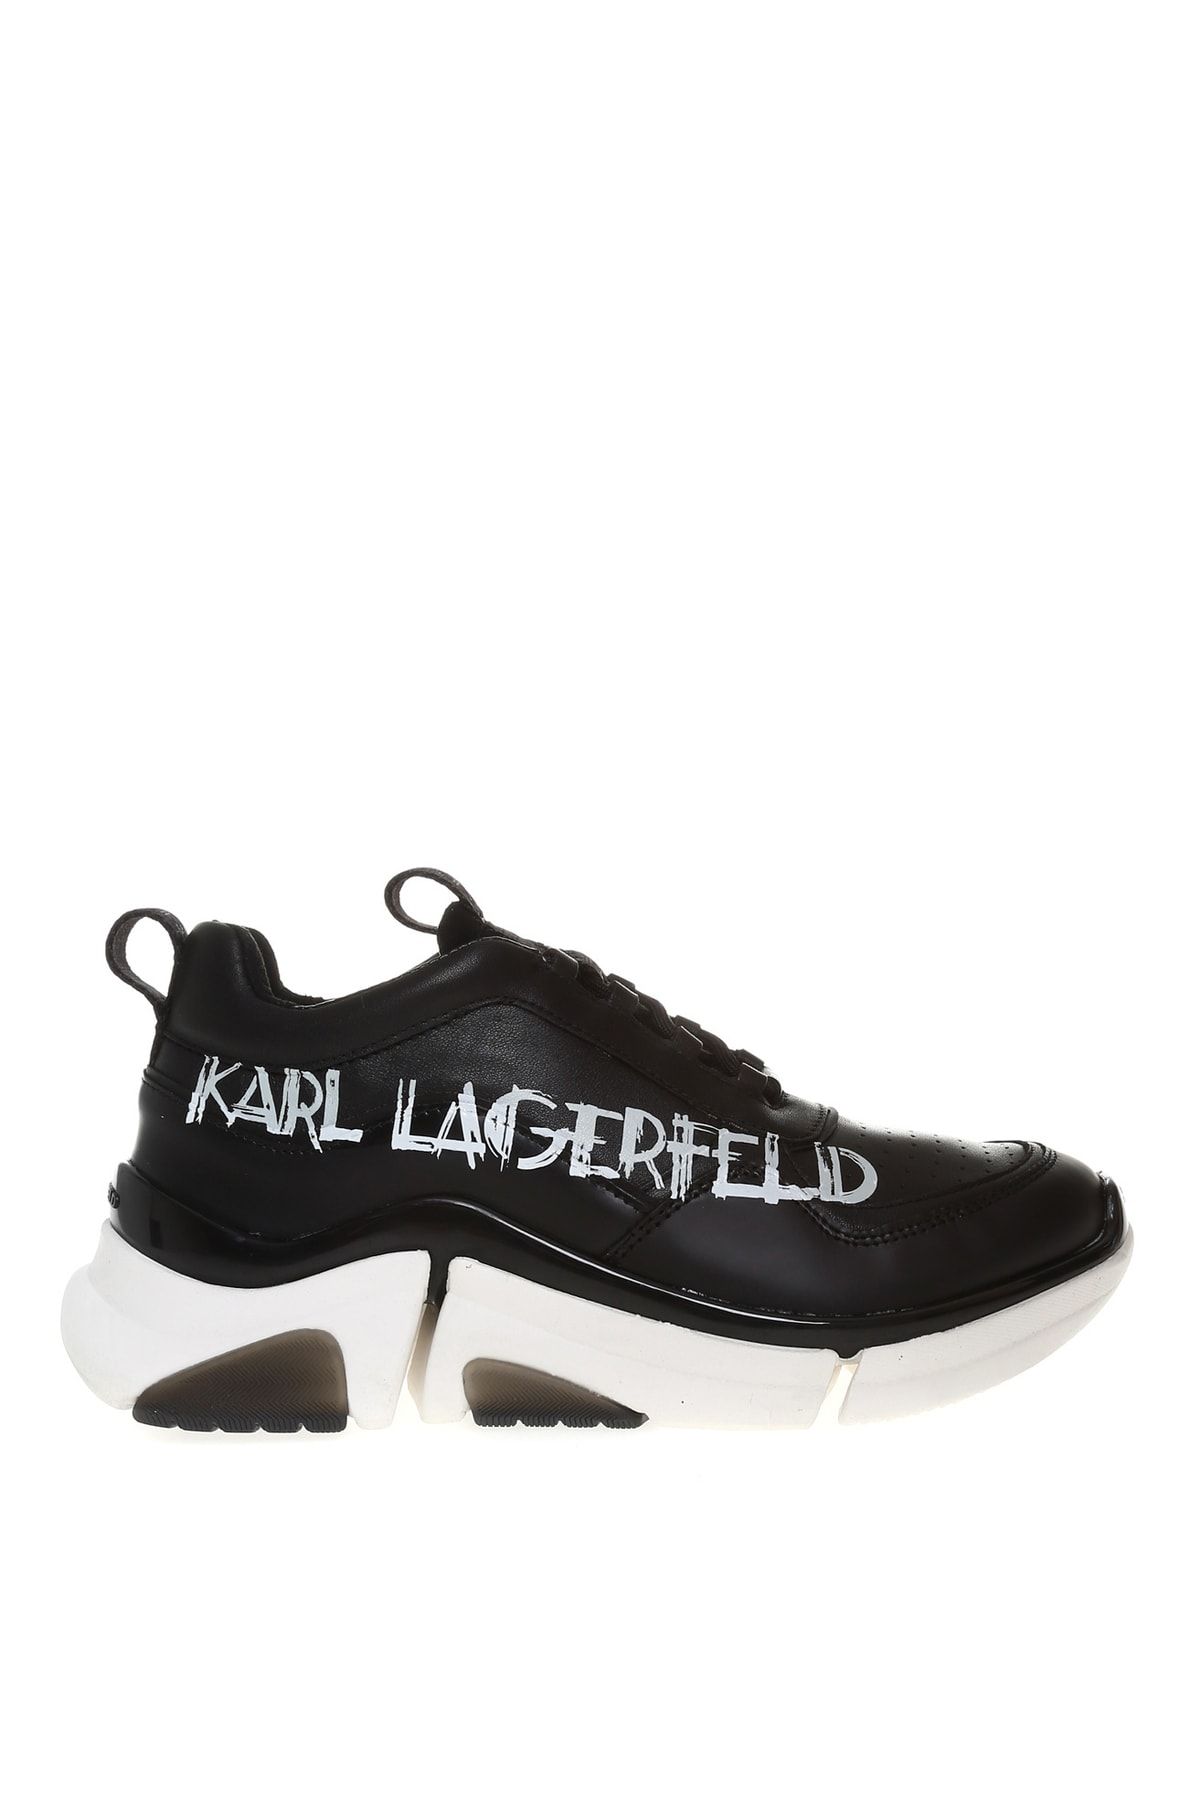 Karl Lagerfeld Venture Art Deco Long Logo Deri Siyah Erkek Sneaker